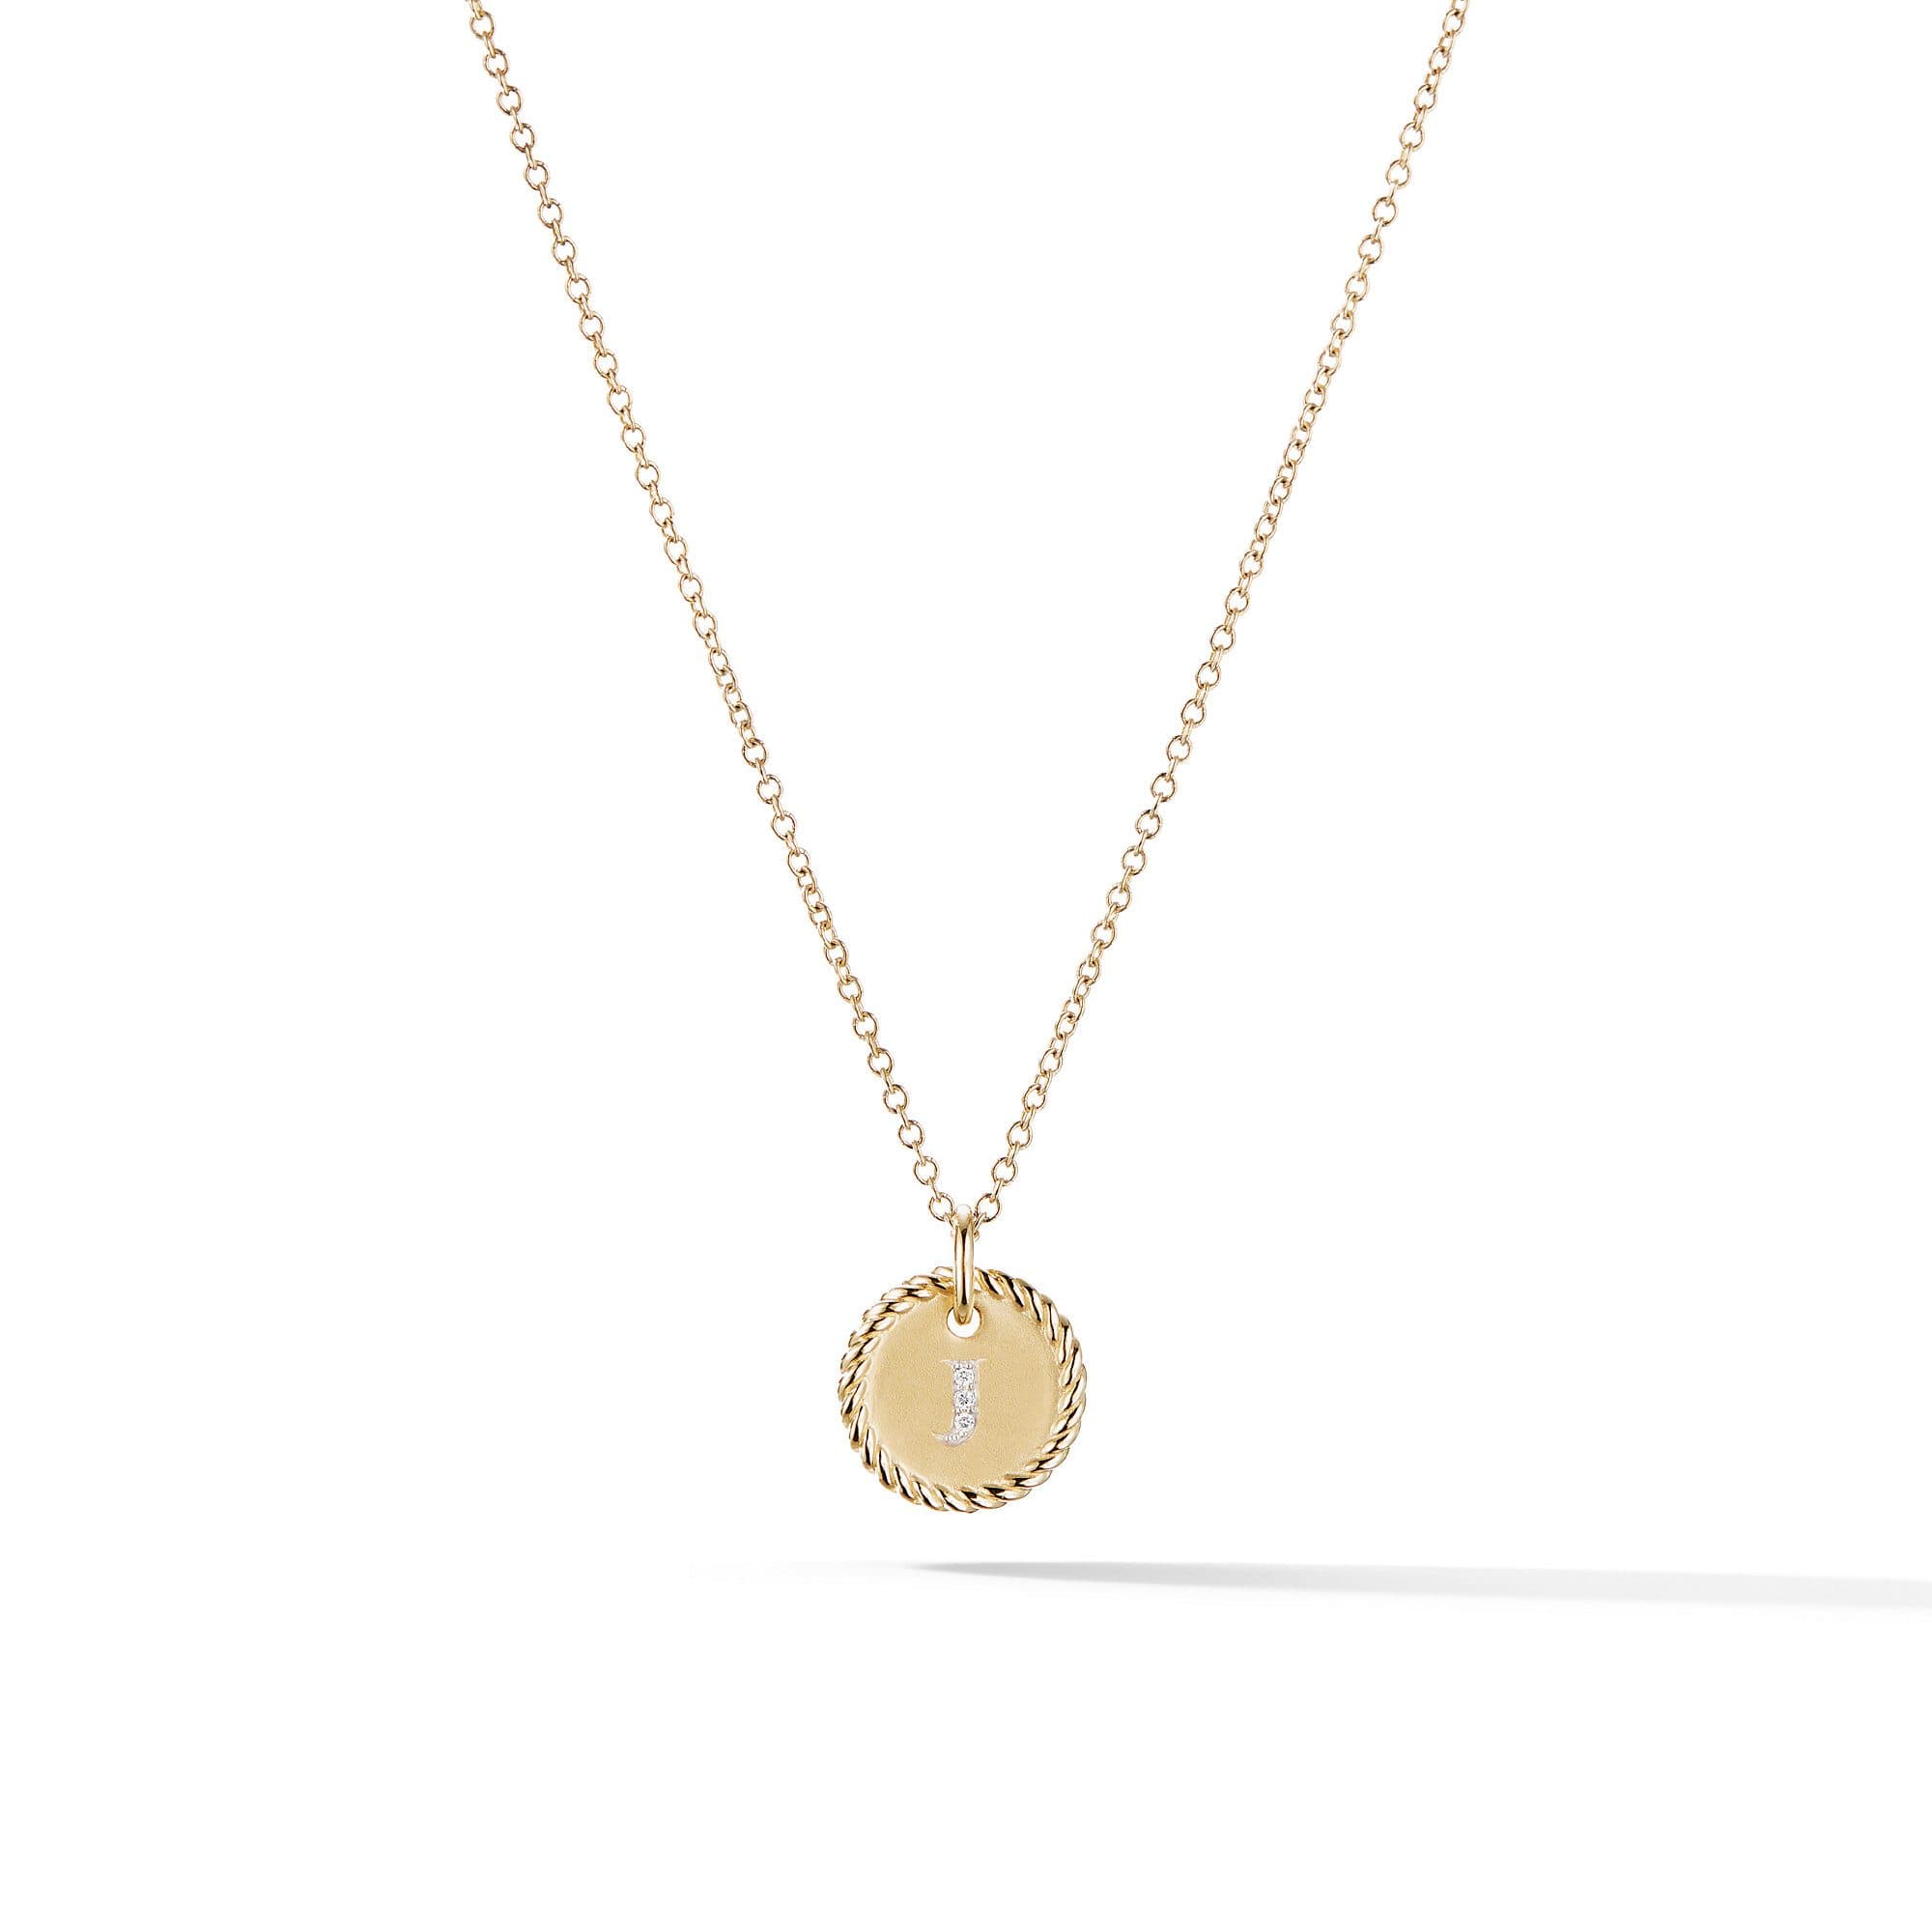 David Yurman J Initial Charm Necklace in 18k Yellow Gold with Diamonds